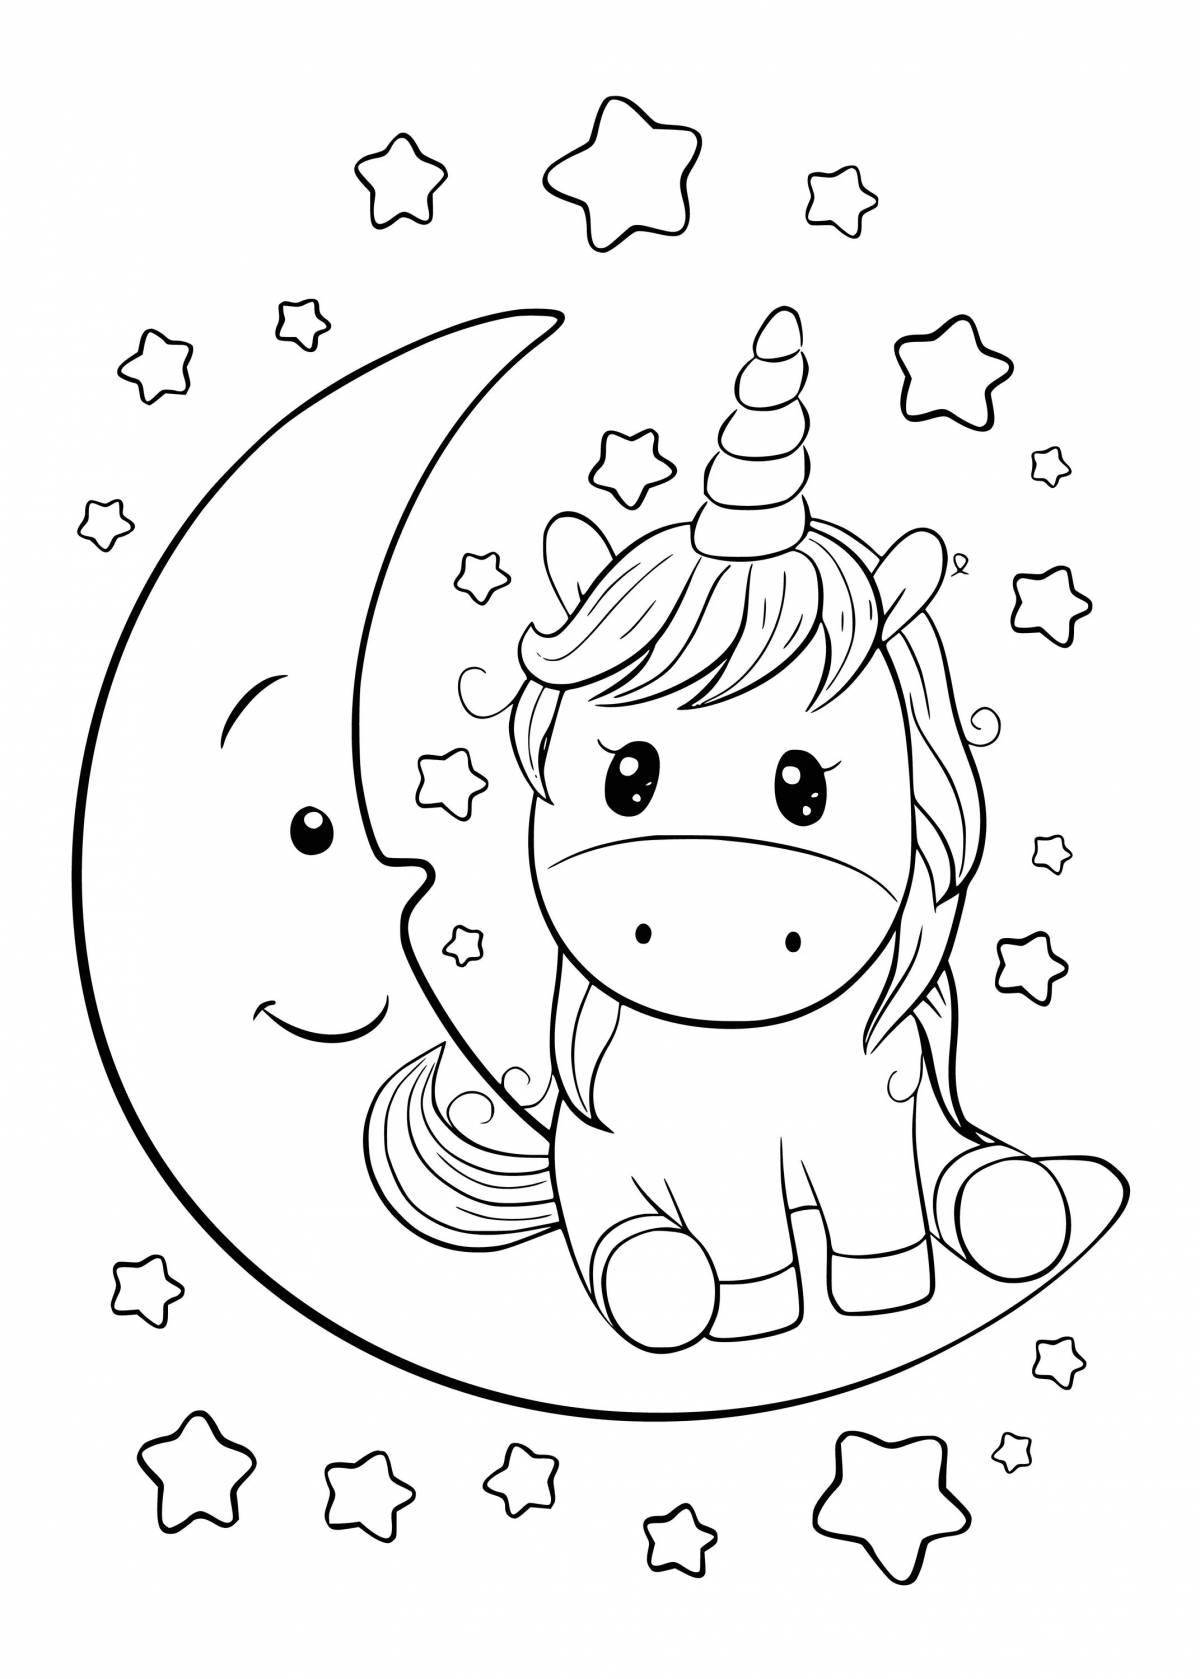 Incredible unicorn drawing for kids